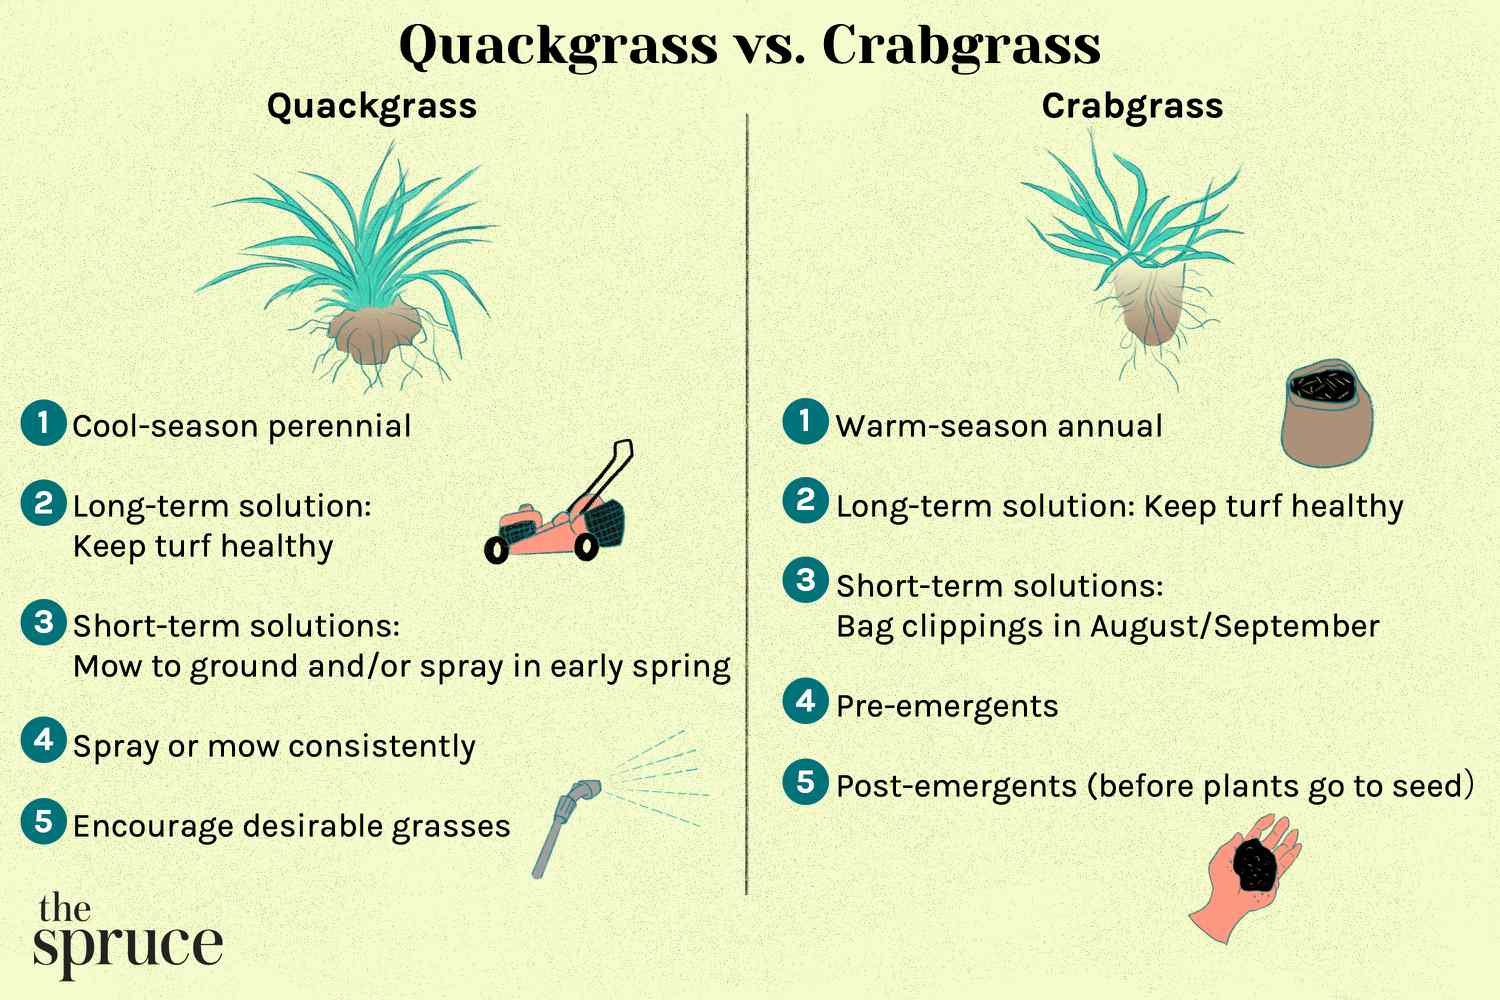 Quackgrass versus crabgrass